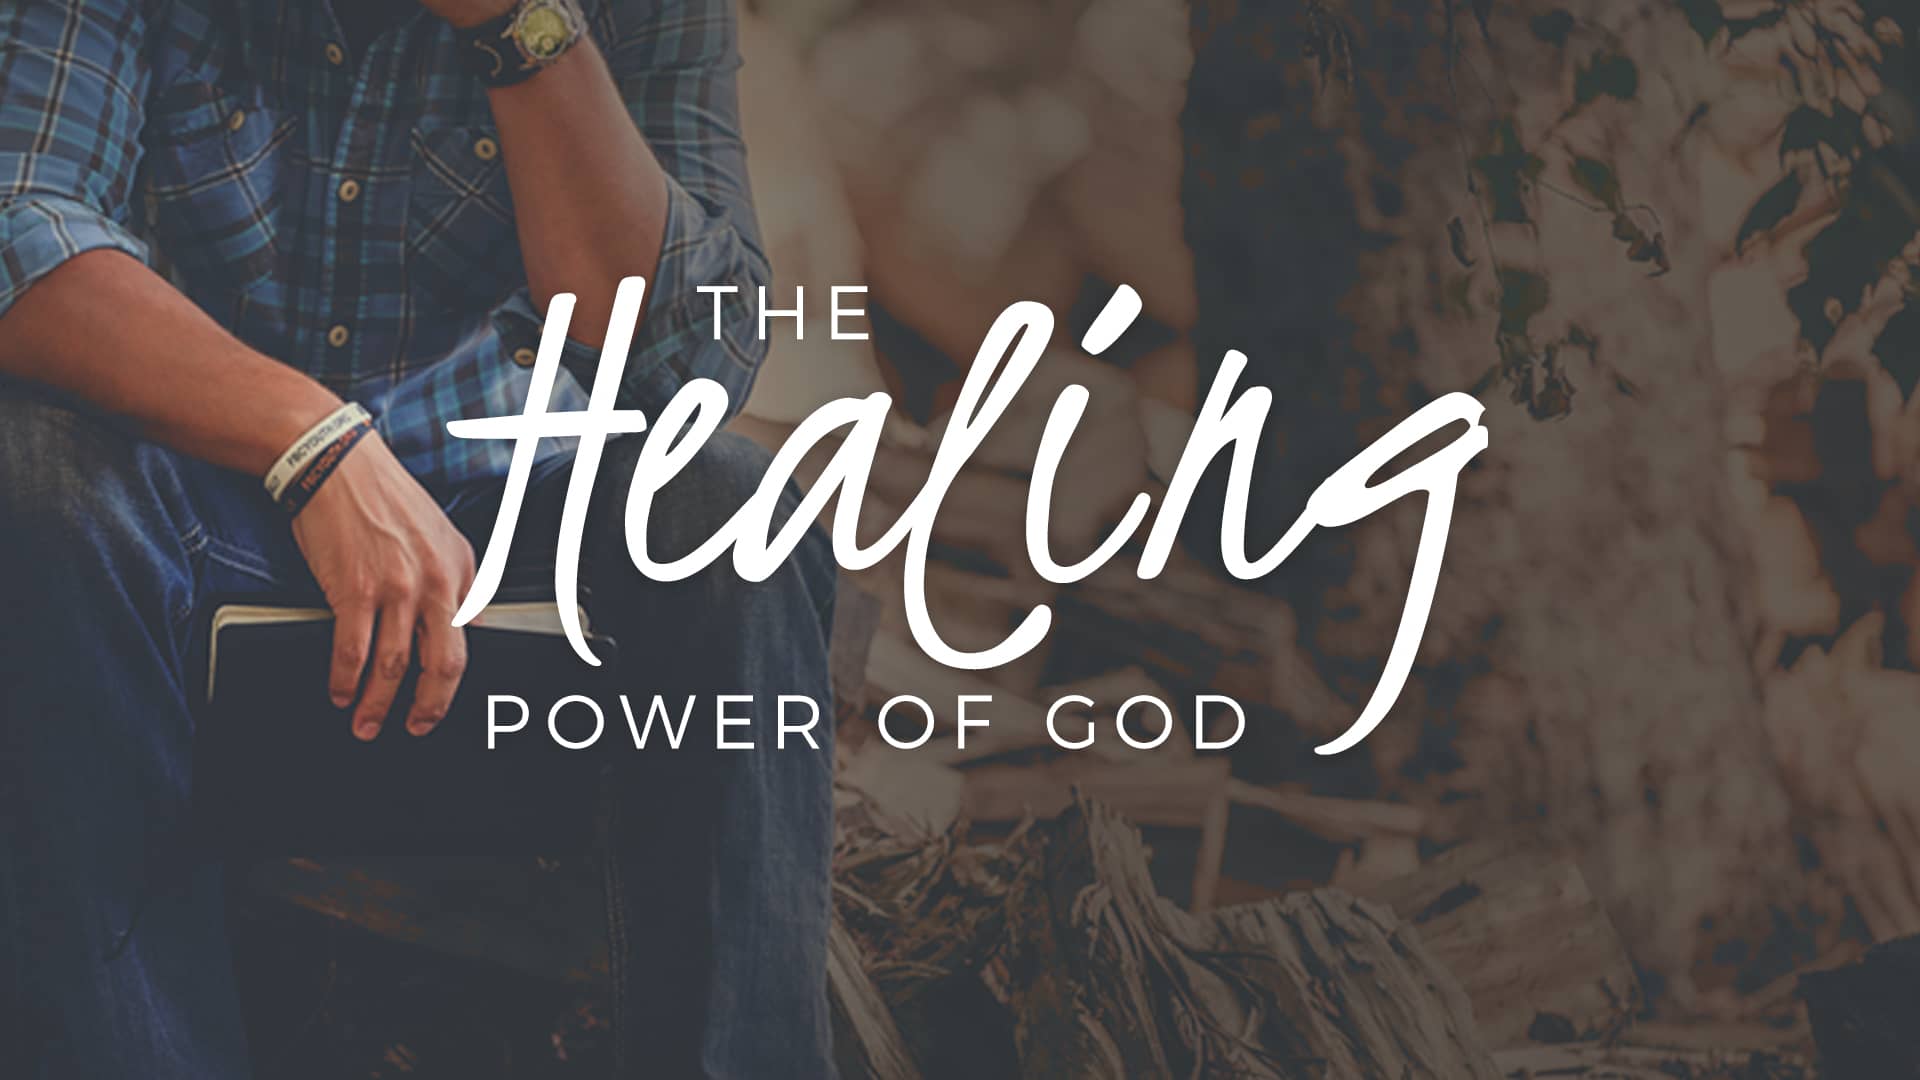 The Healing Power of God on Vimeo